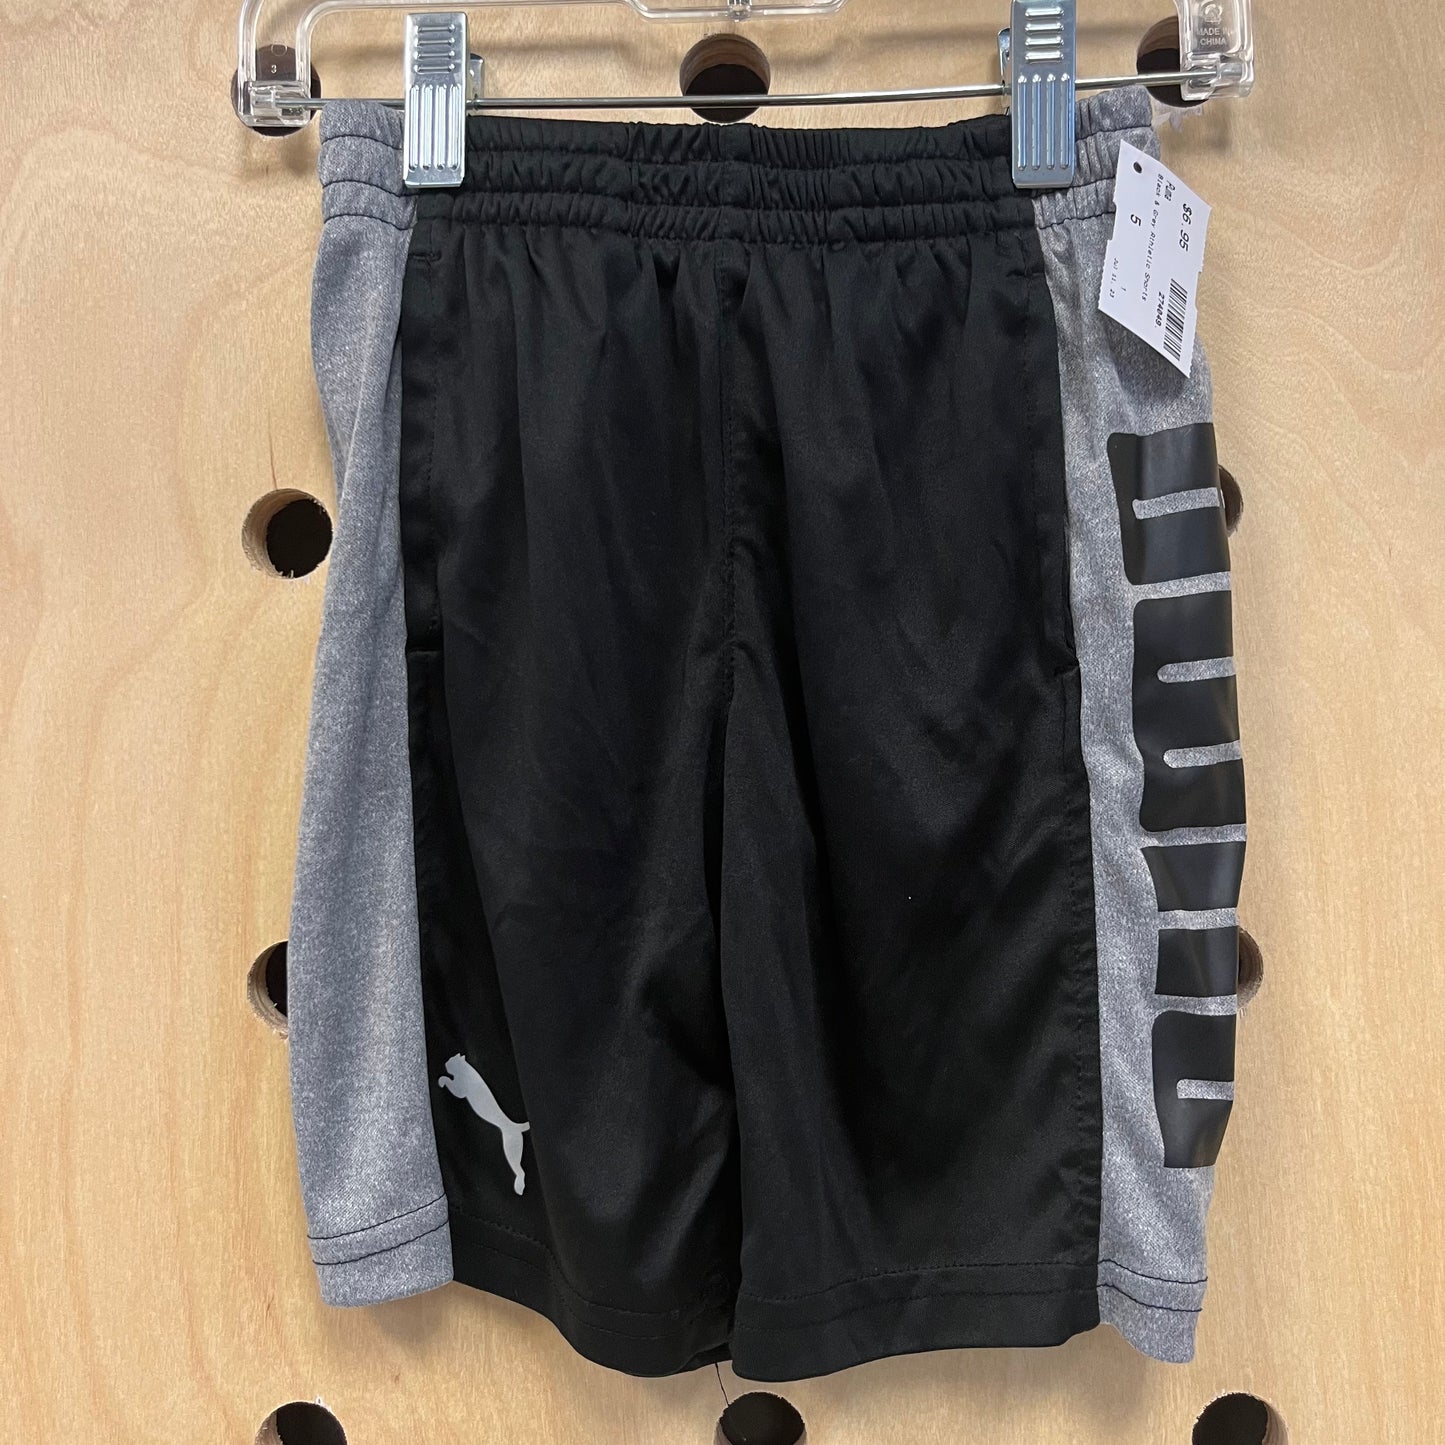 Black & Grey Athletic Shorts